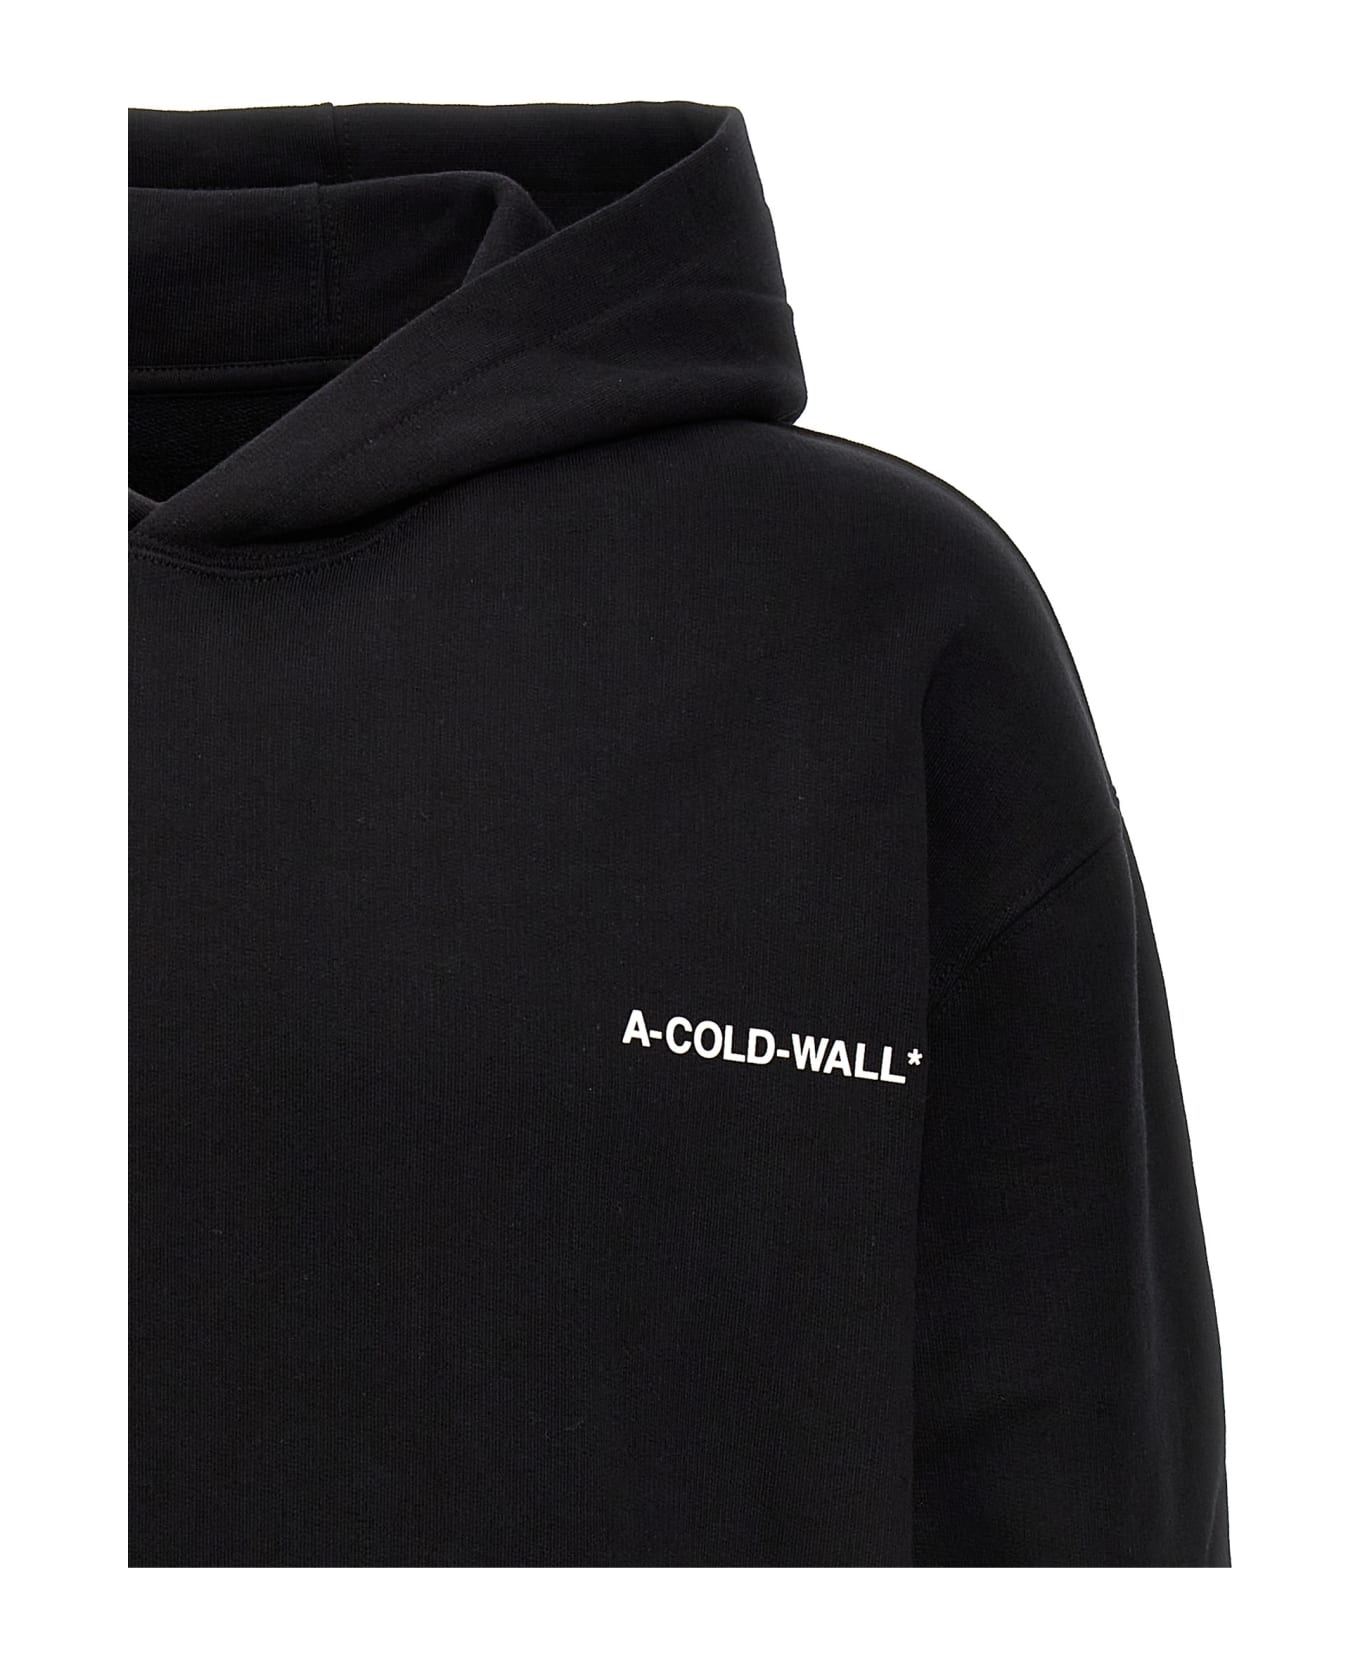 A-COLD-WALL 'essential Small Logo' Hoodie Fleece - BLACK フリース